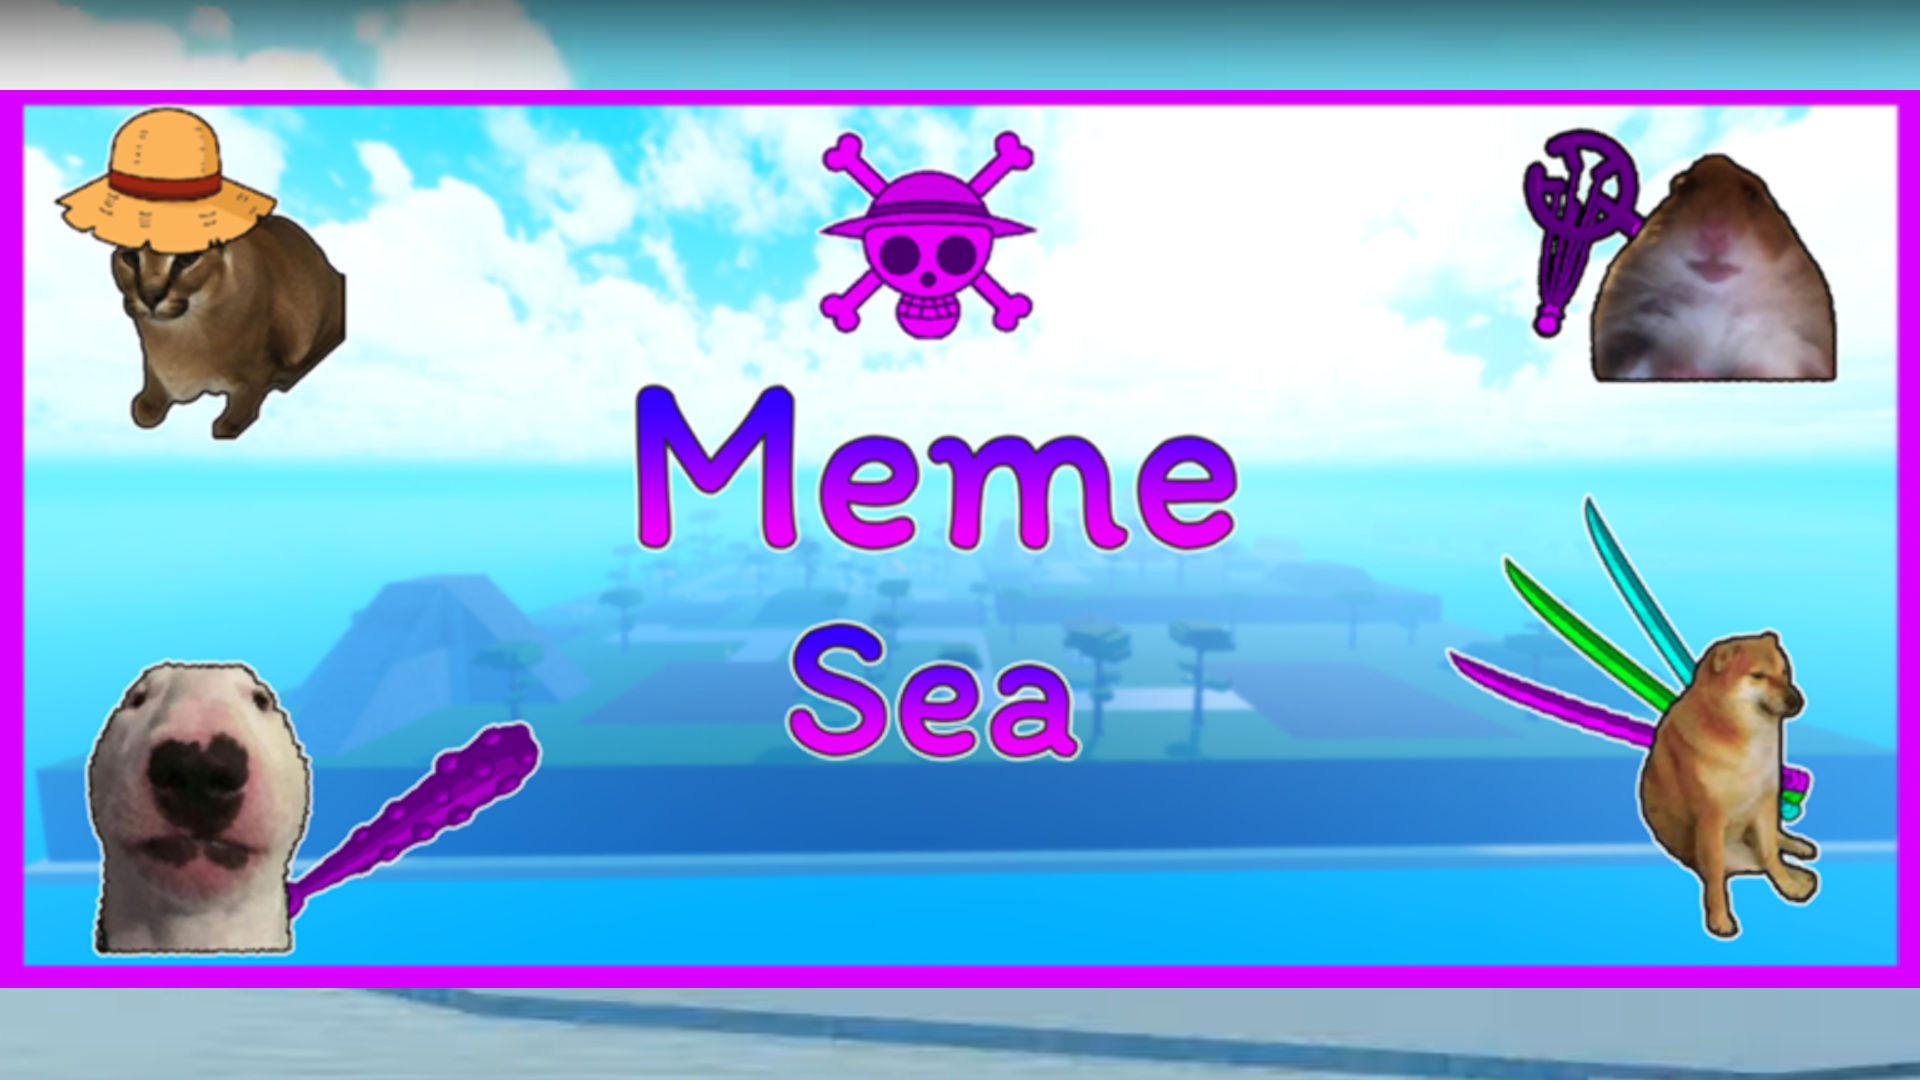 Meme Sea codes